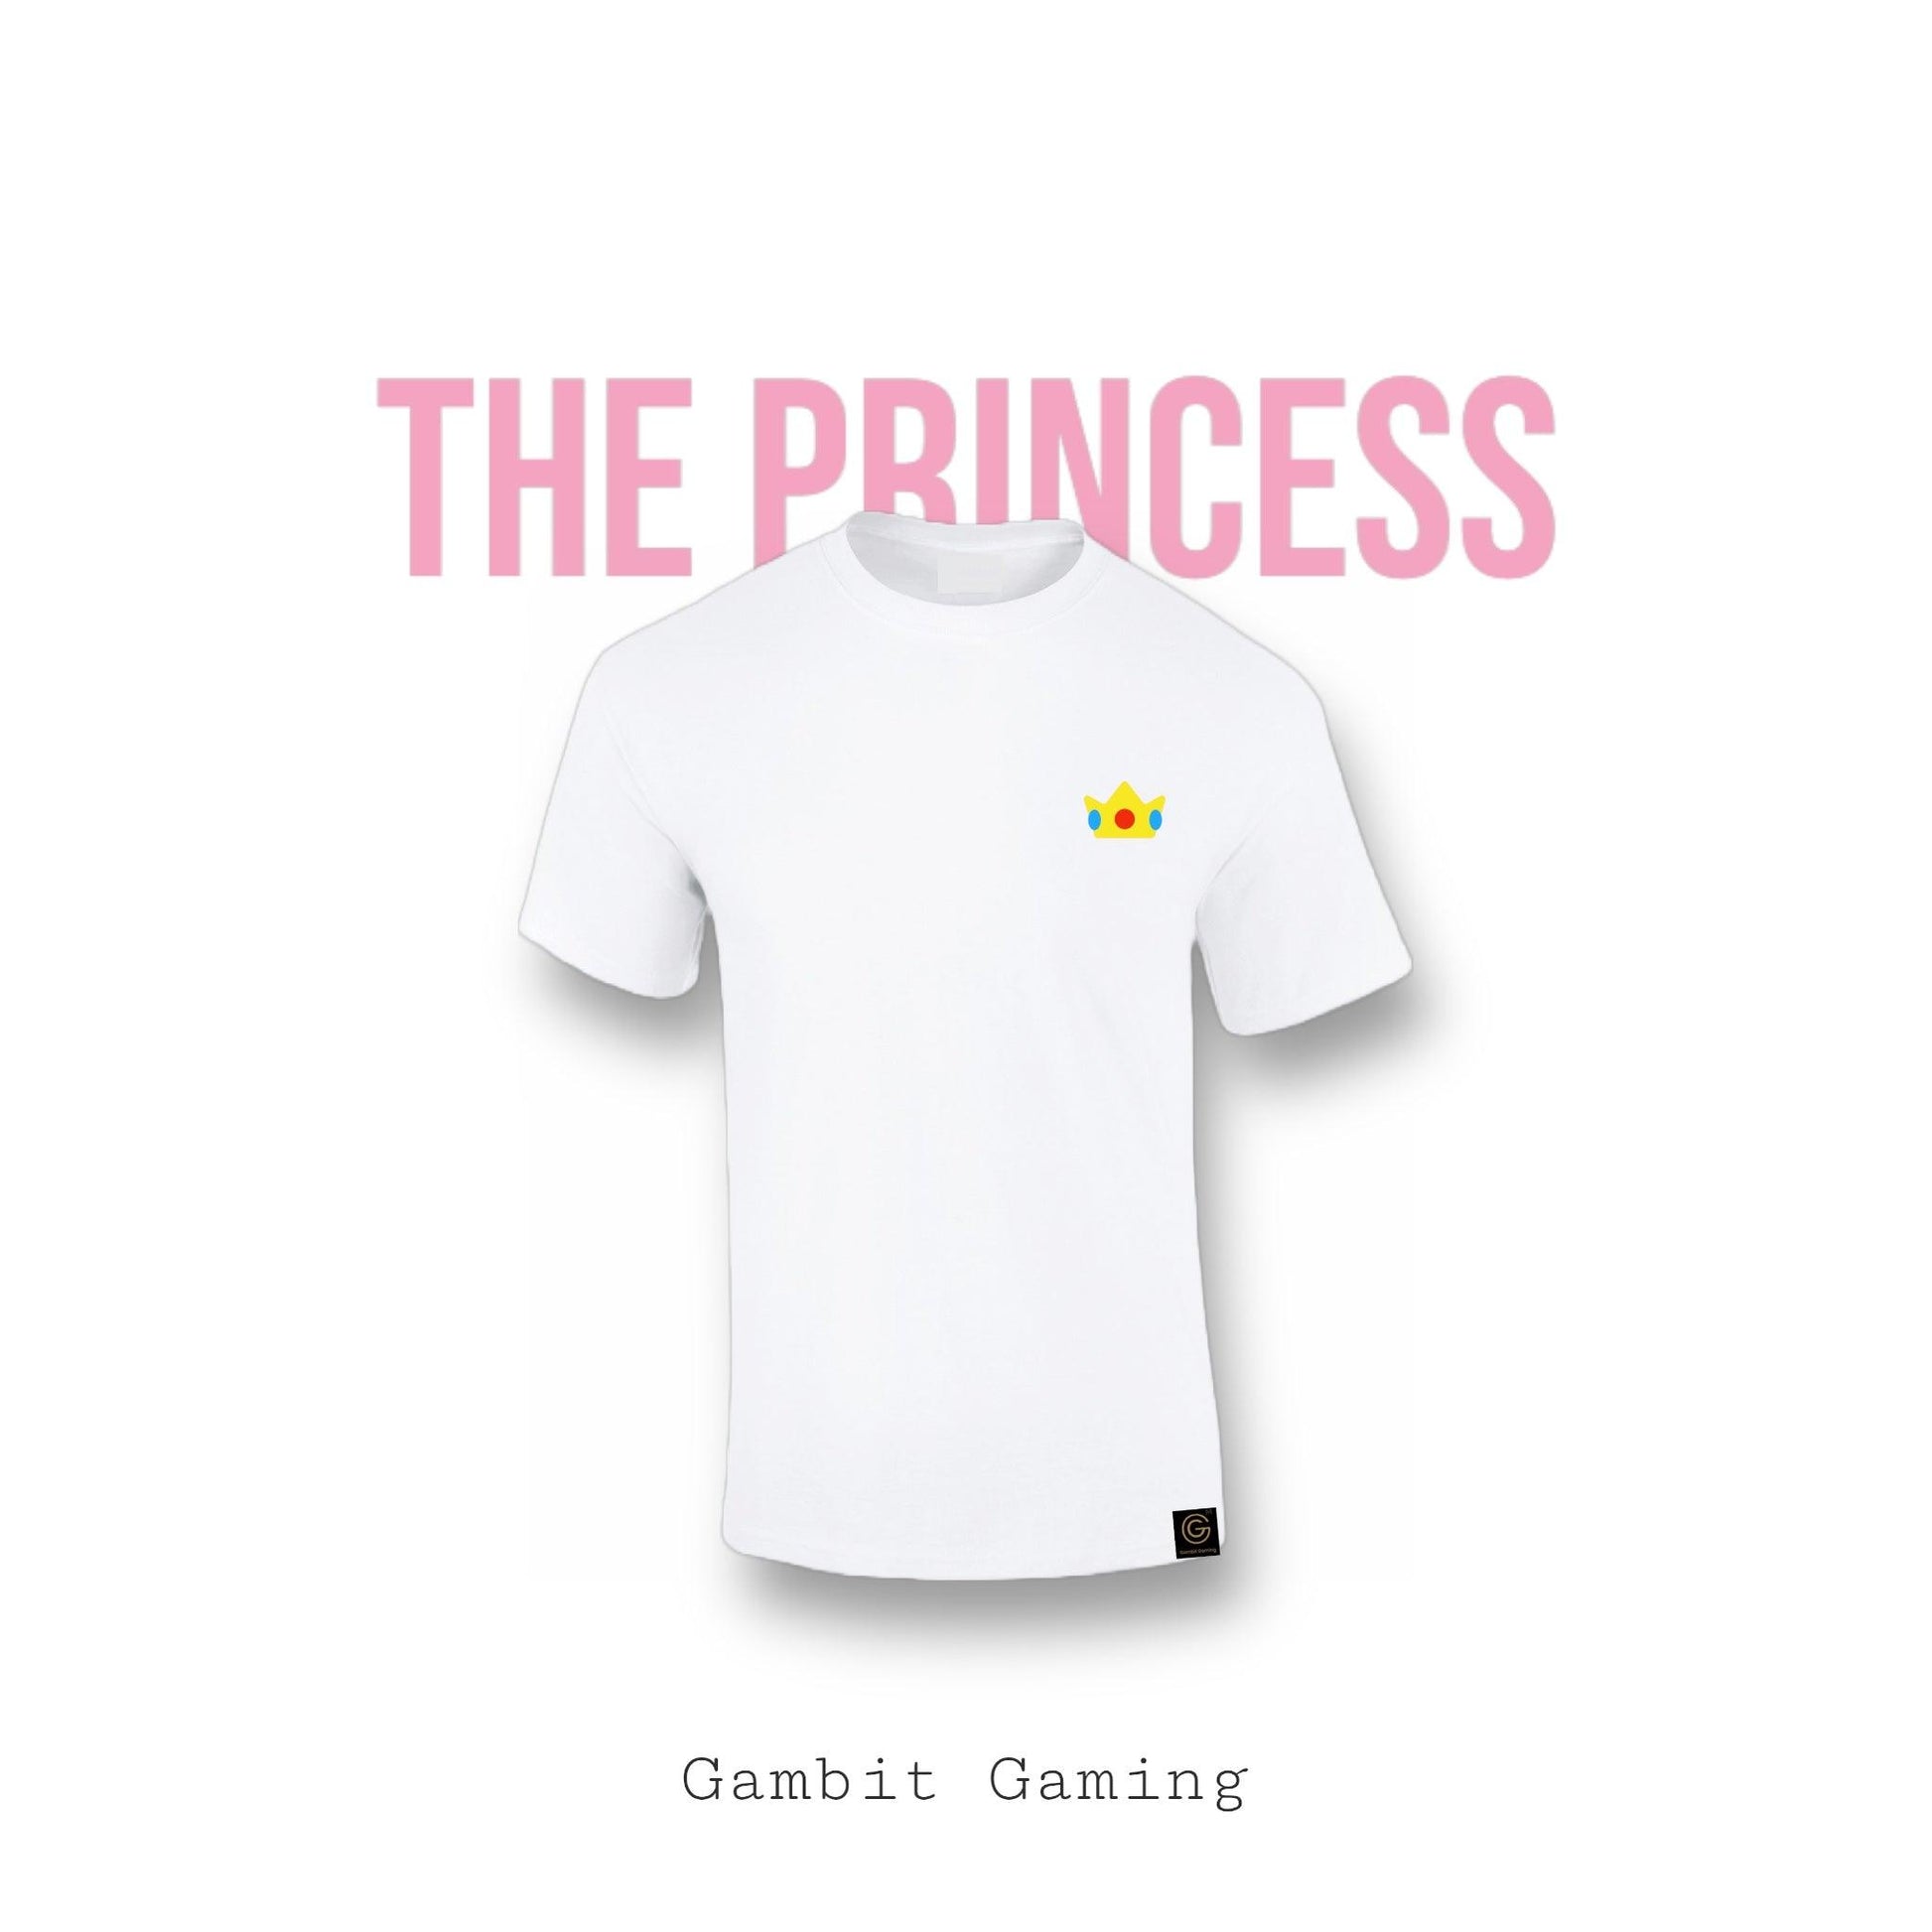 The Princess - Gambit Gaming